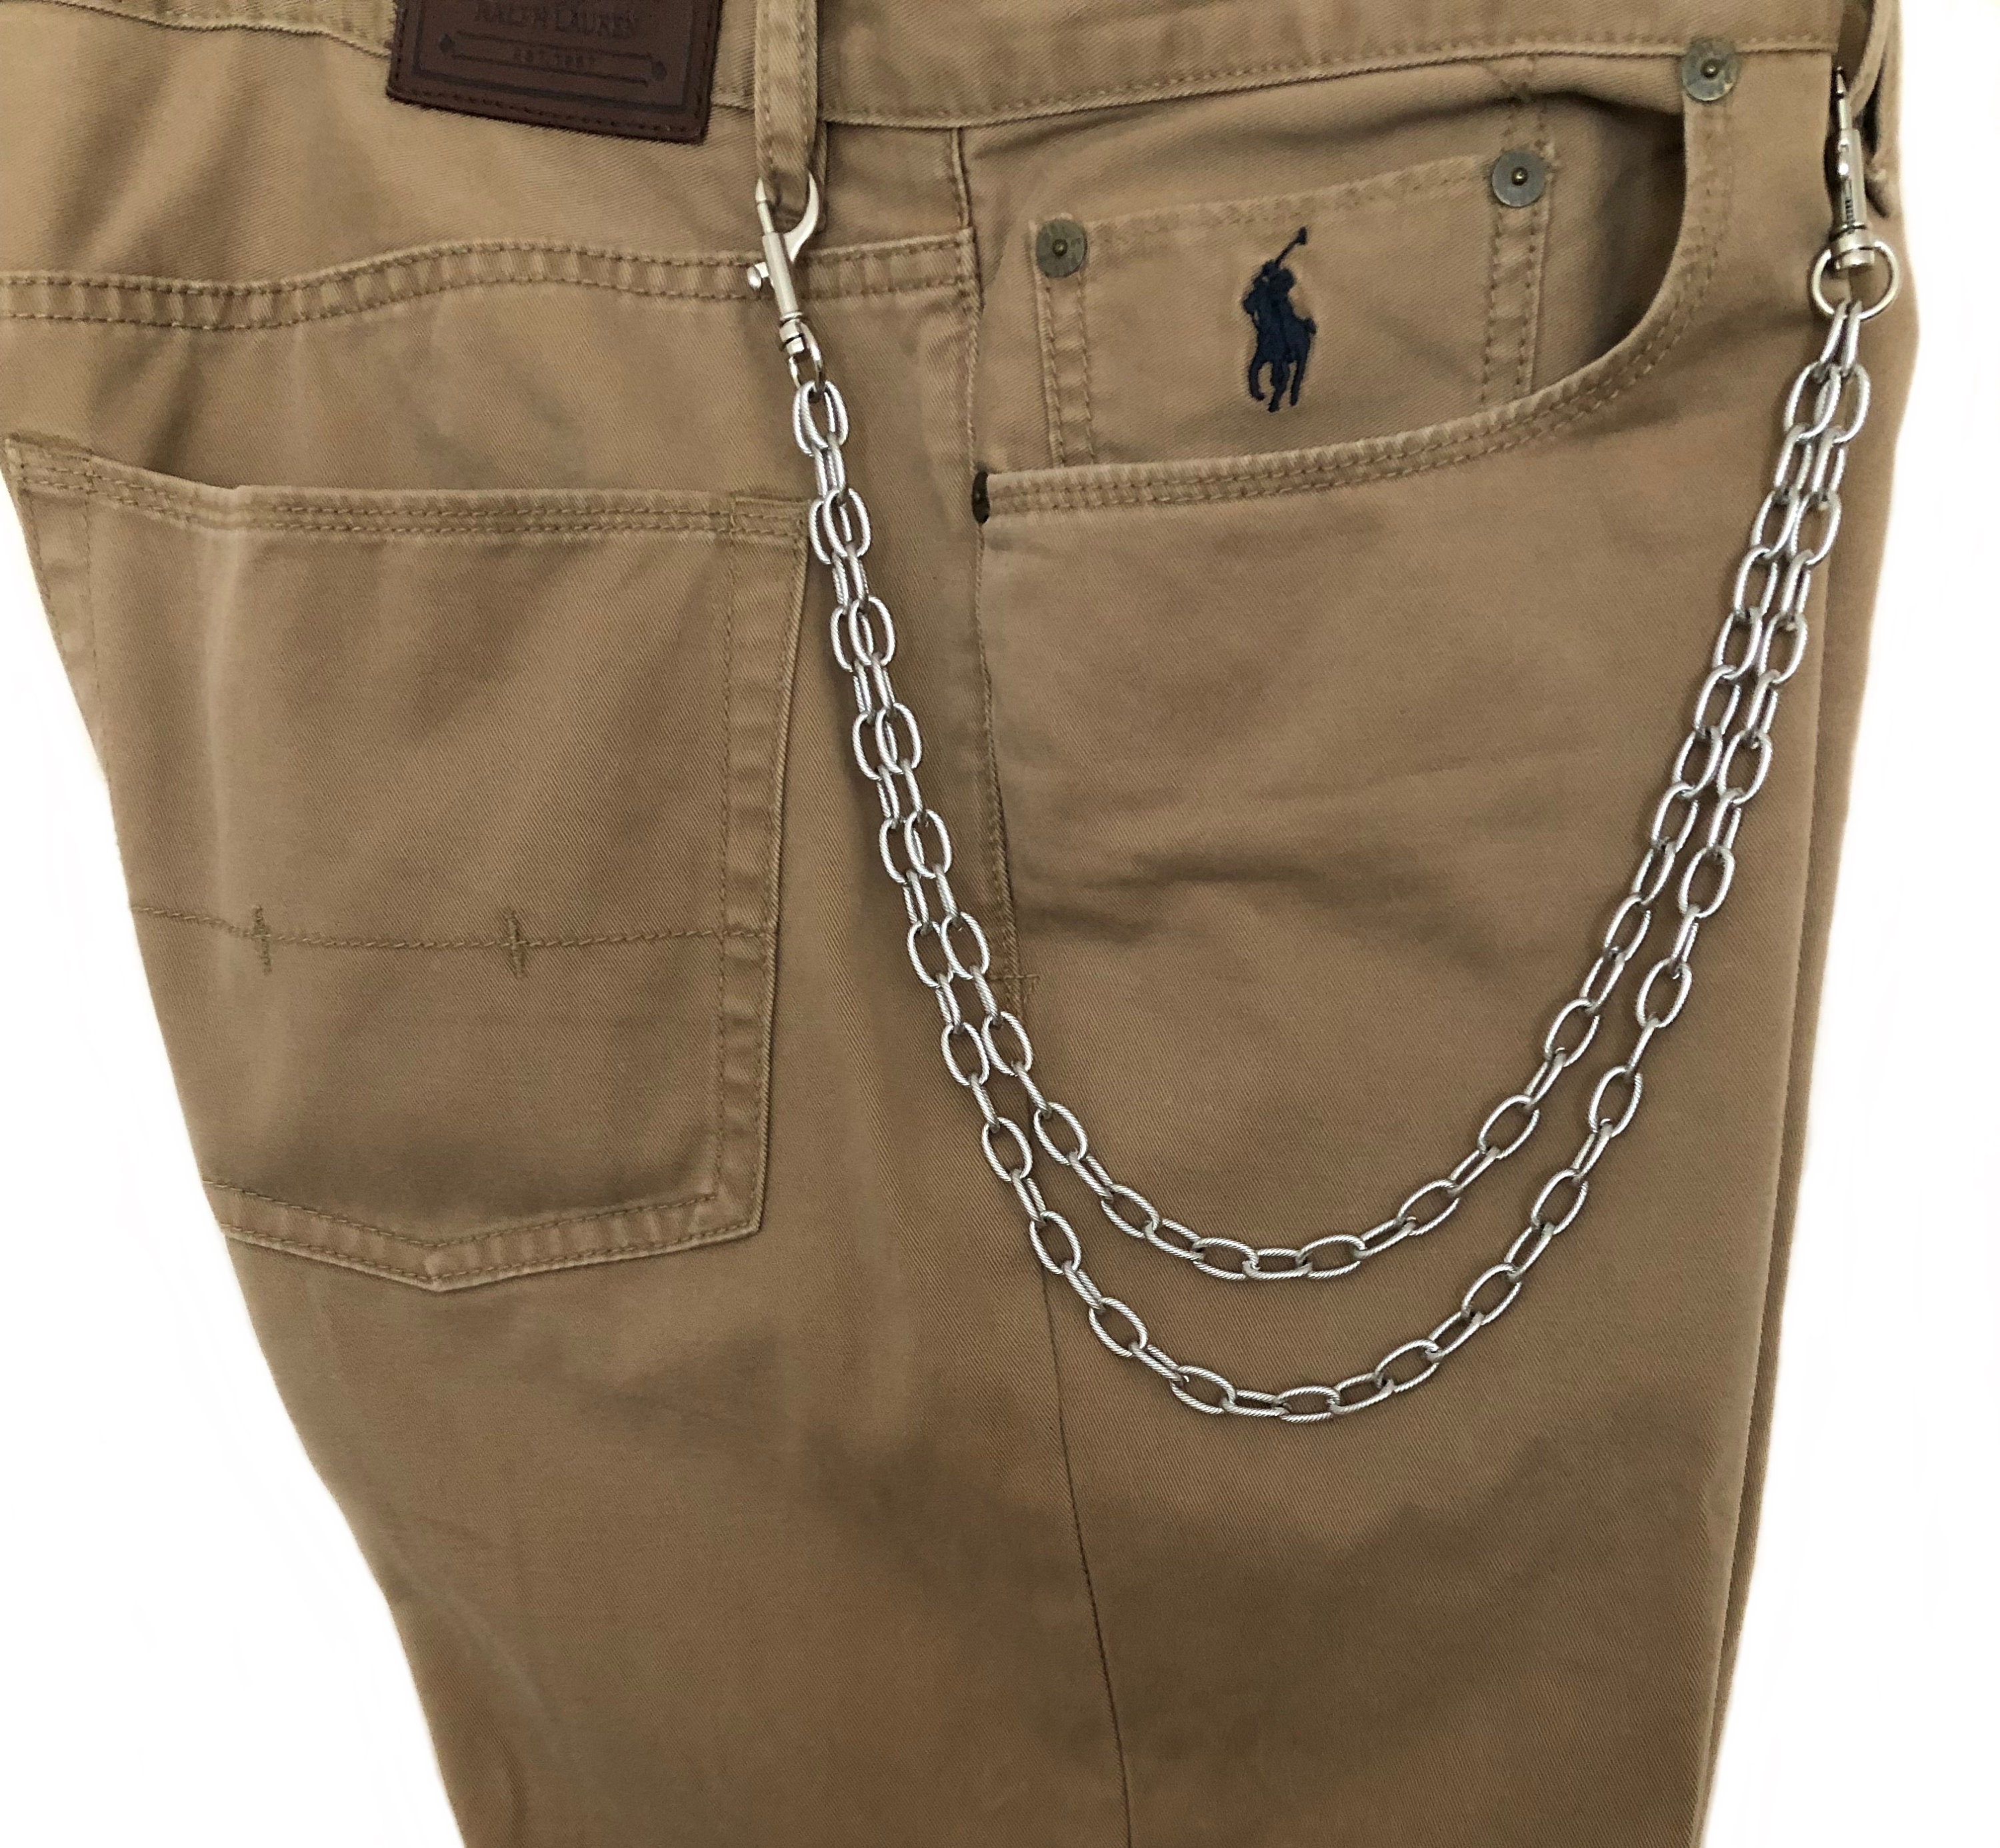 OKFCUS Men Cool Hip Hop Punk Pants Trousers Wallet Key Chain Motorcyle Jean  Gothic Rock DIY Craft Decor Rock Style Jeans Pant Chain Heavy Waist Chain